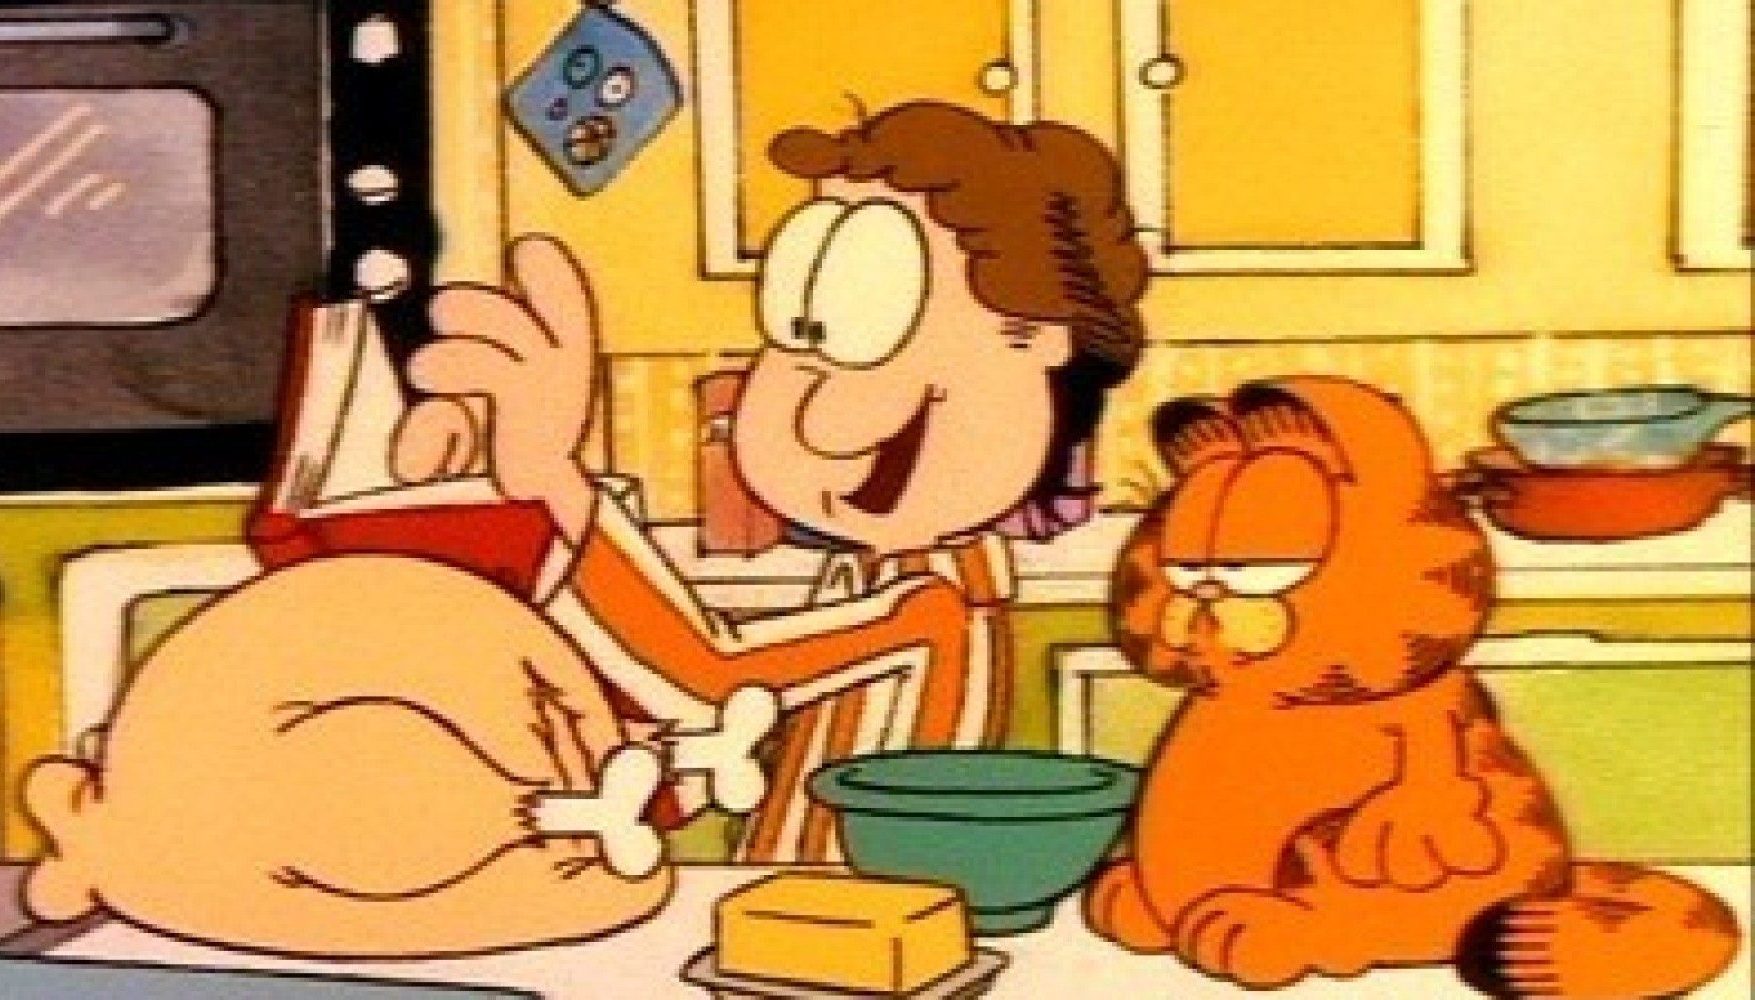 Jon Arbuckle and Garfield prepare a chicken dinner in Garfield and Friends